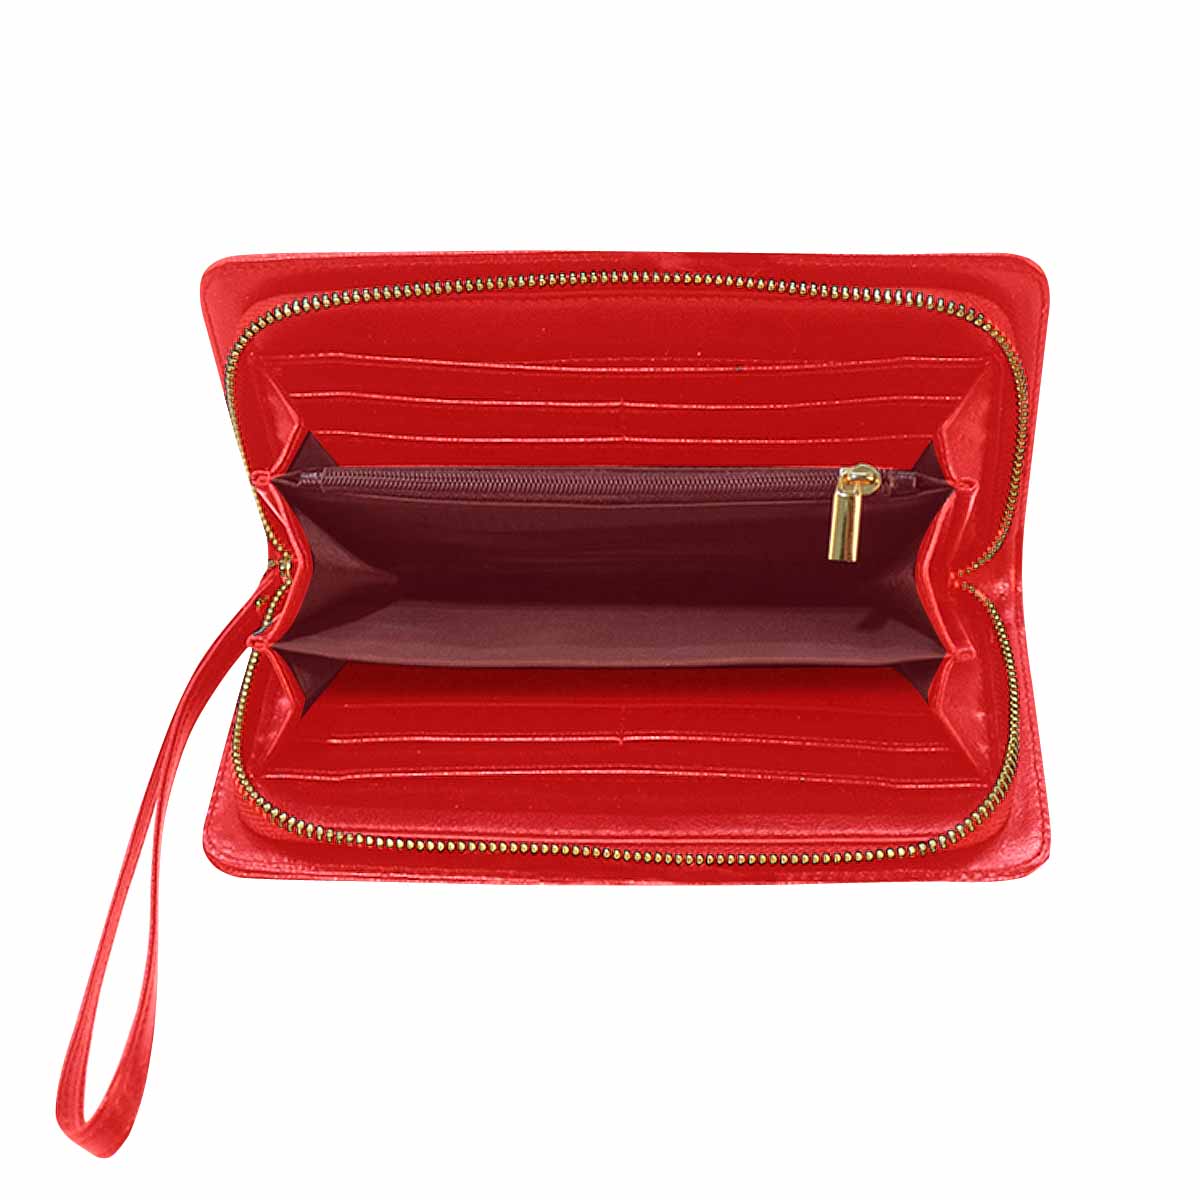 Victorian lace print womens wallet, clutch purse, red trim, design 37